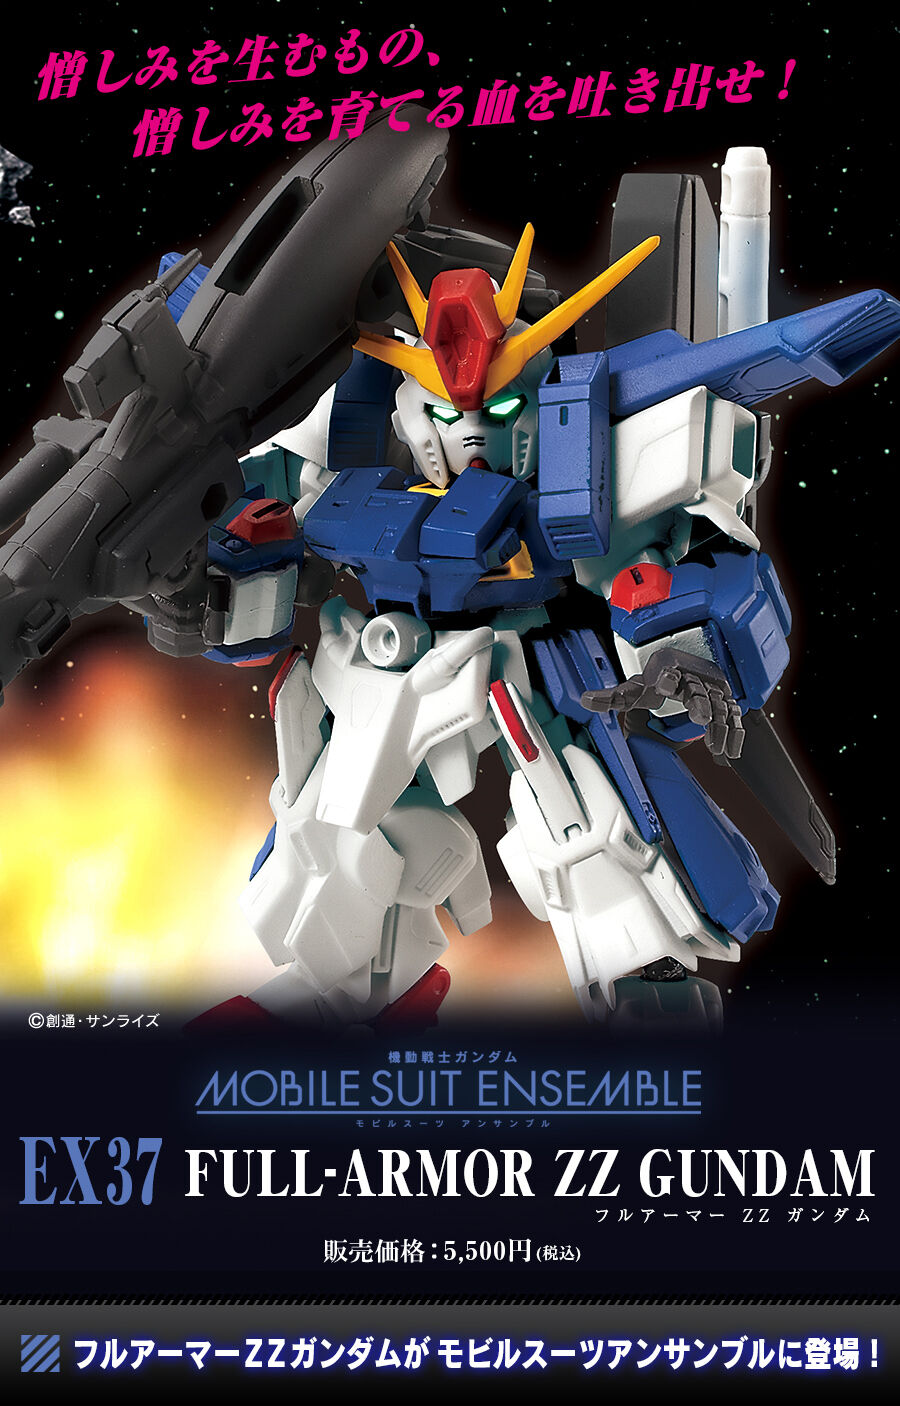 MS Ensemble EX37 FA-010S Full Armor Double Zeta Gundam